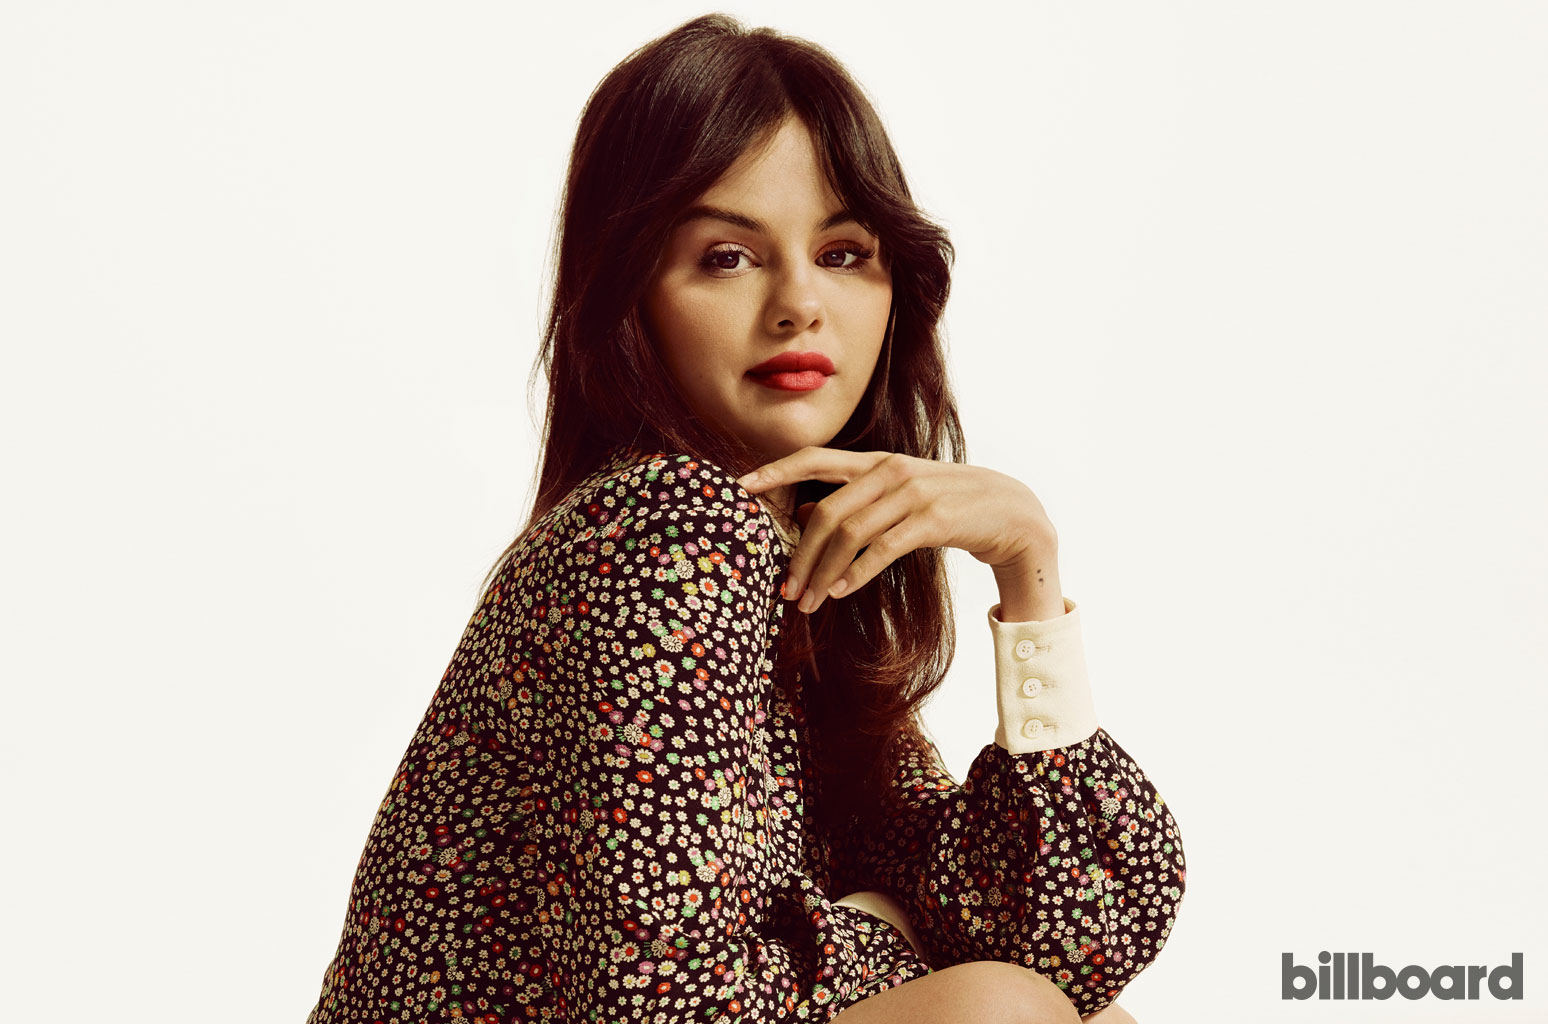 Beautiful Selena Gomez Face 2020 Wallpapers